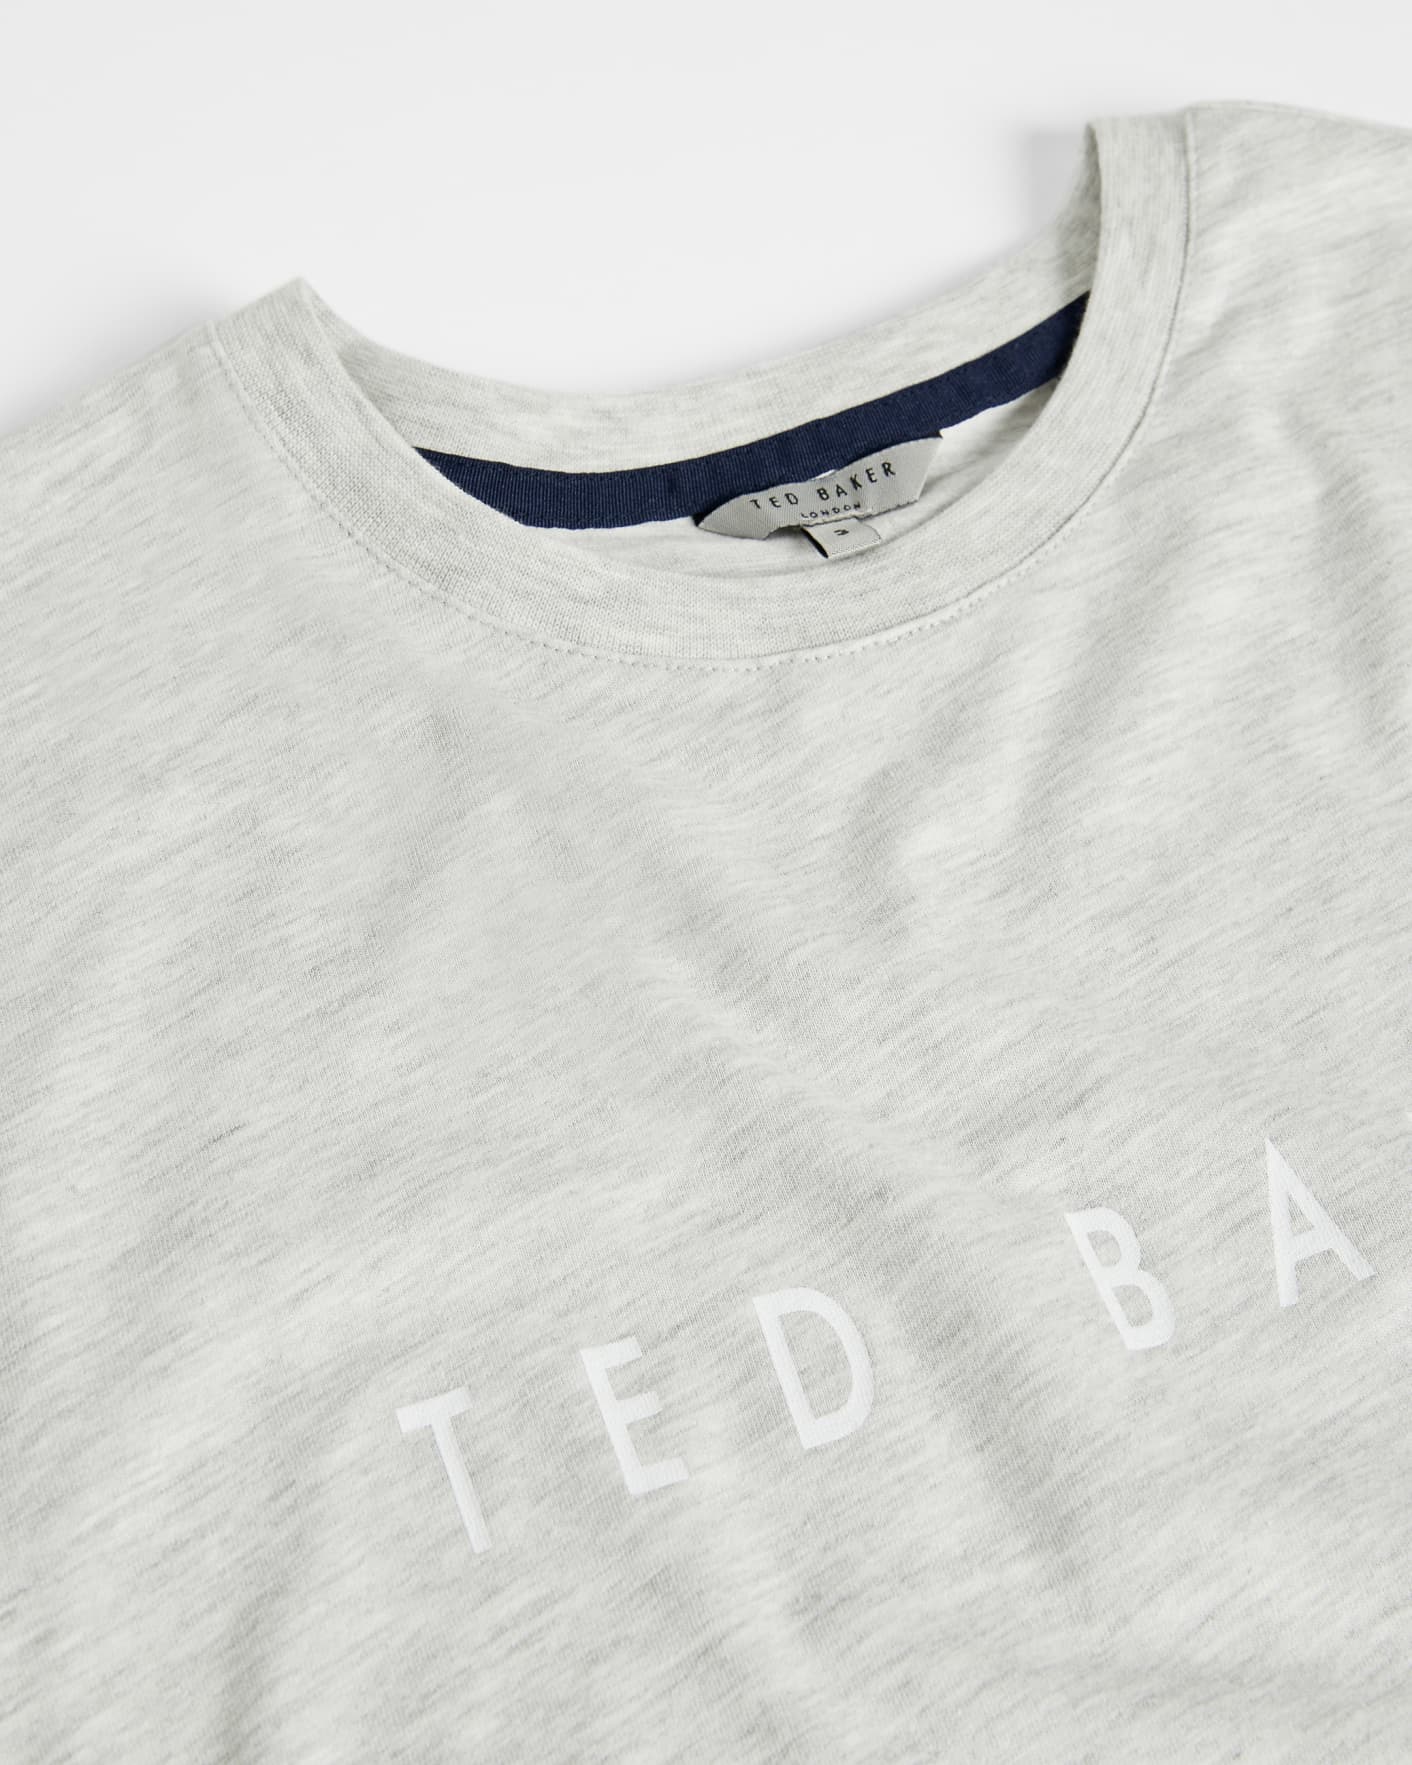 Gray SS branded t-shirt Ted Baker